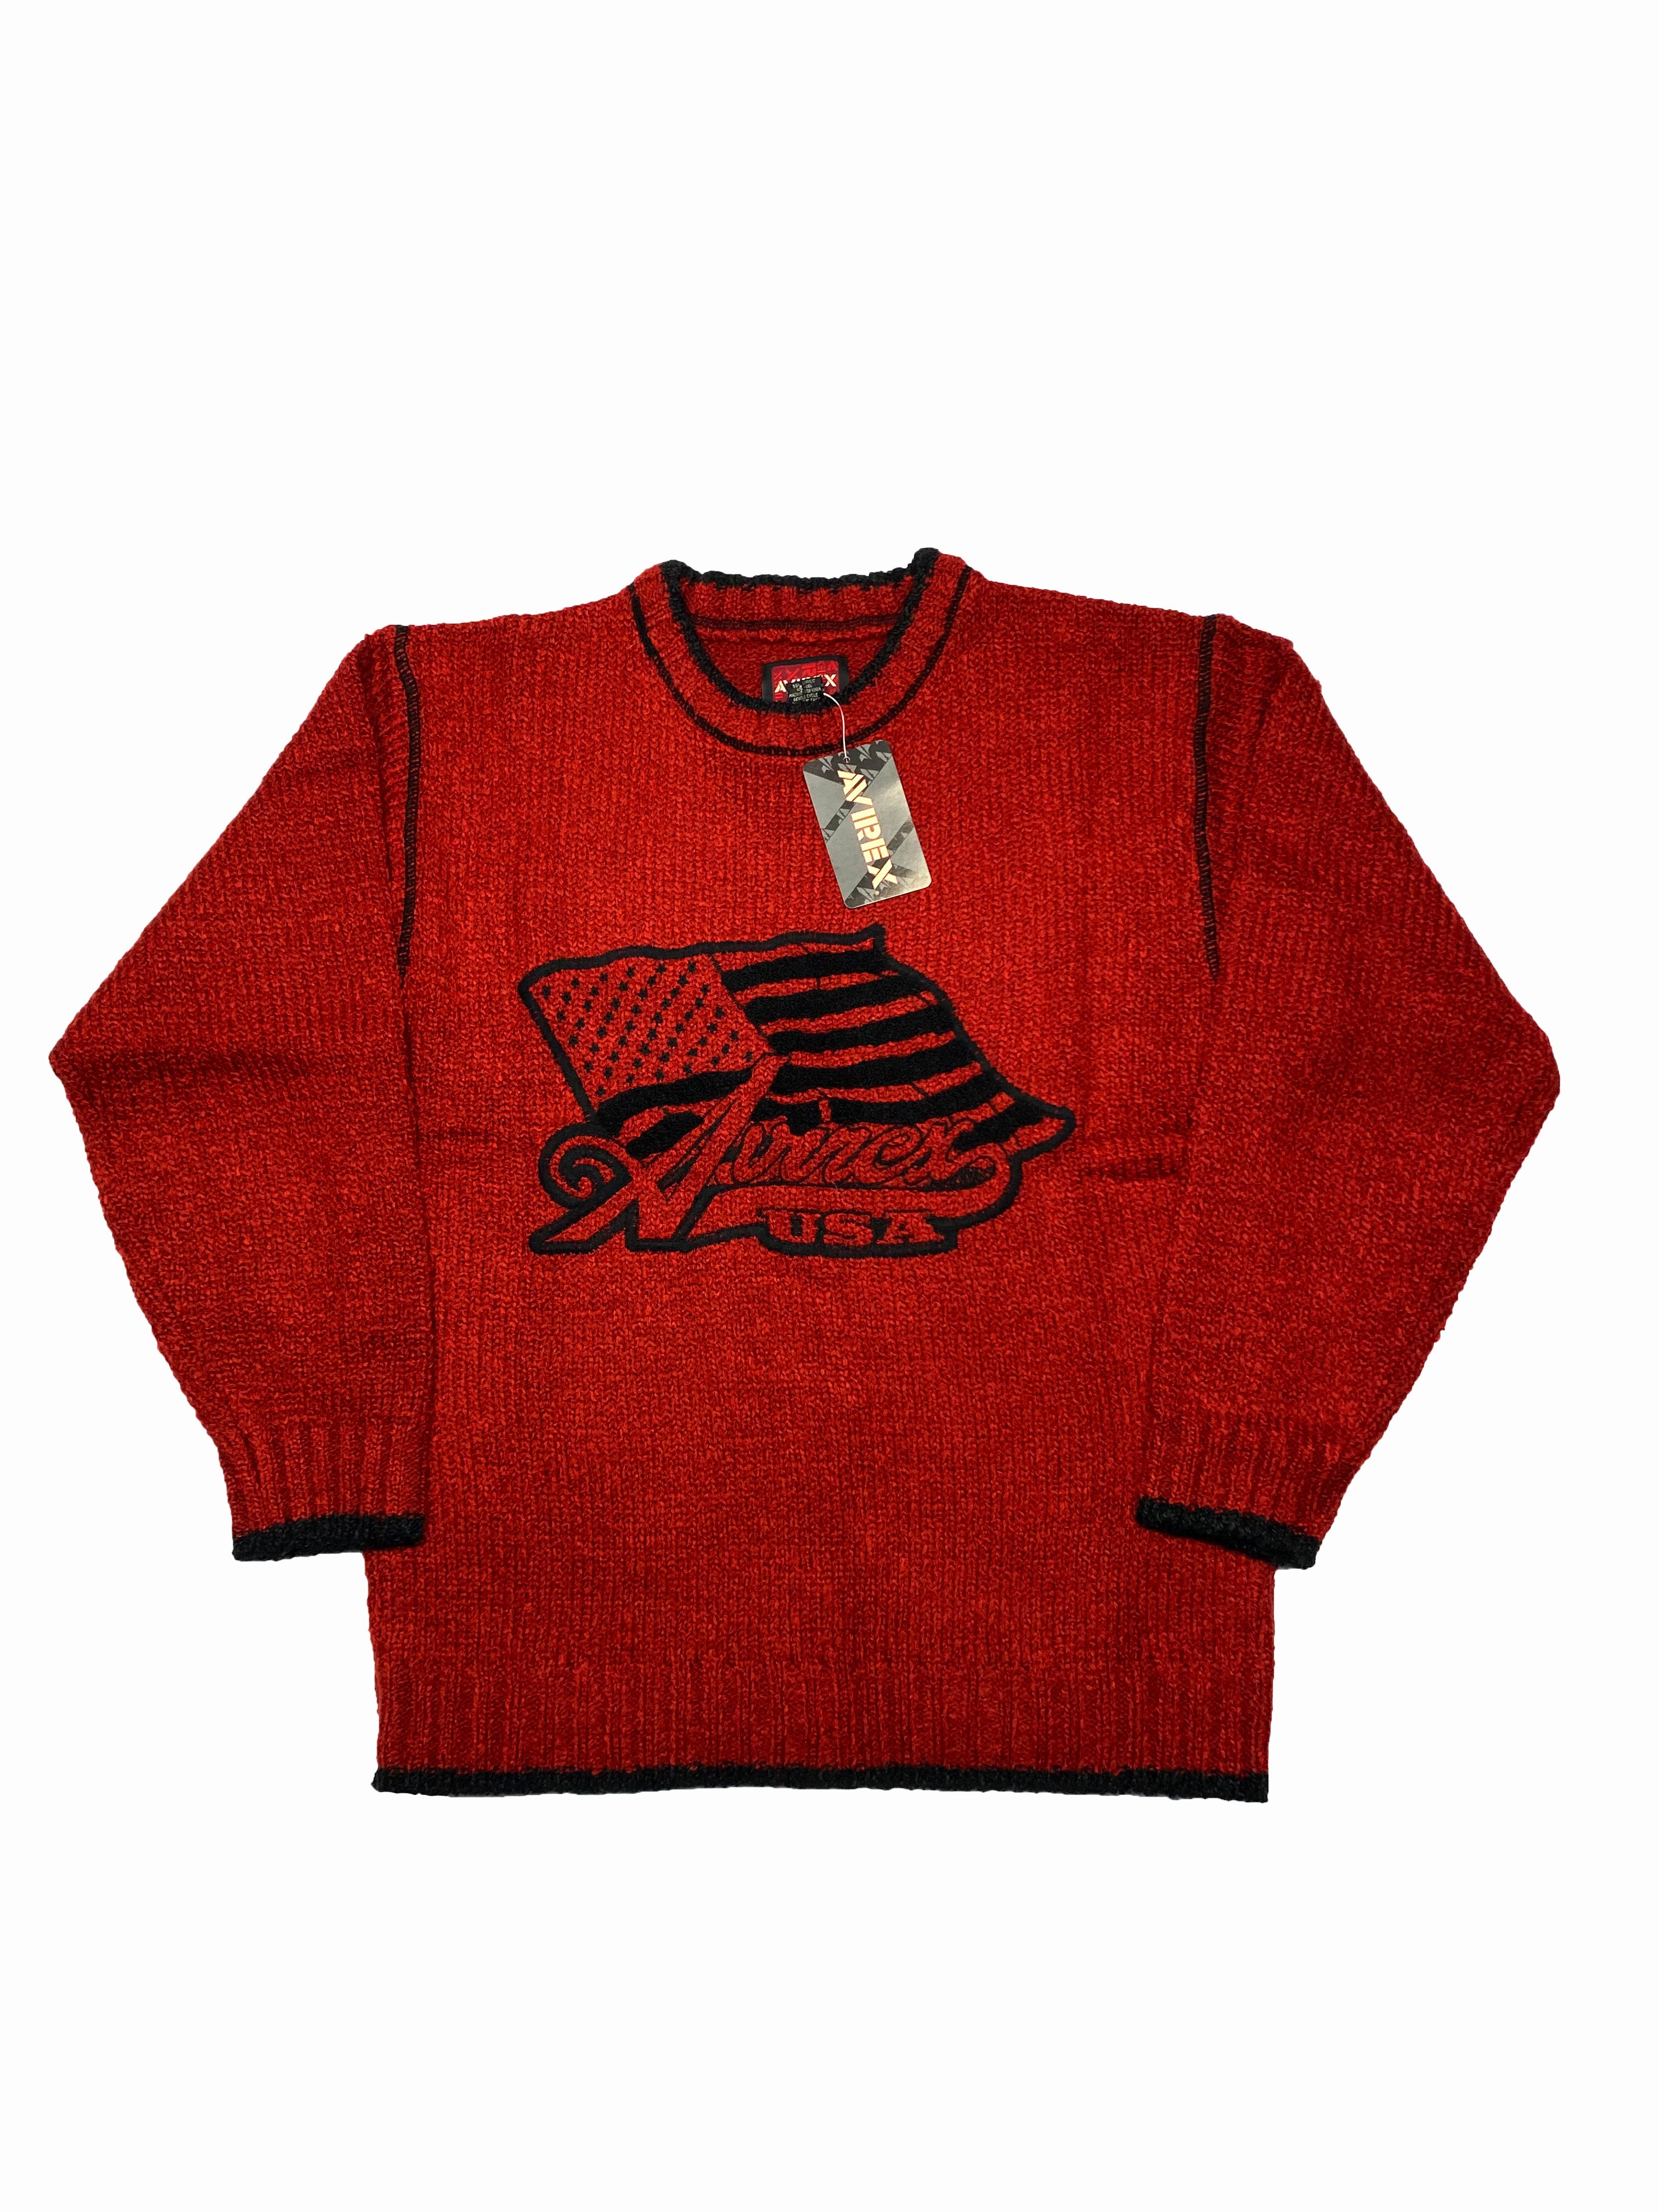 Avirex Red Wool Knit BNWT 90's